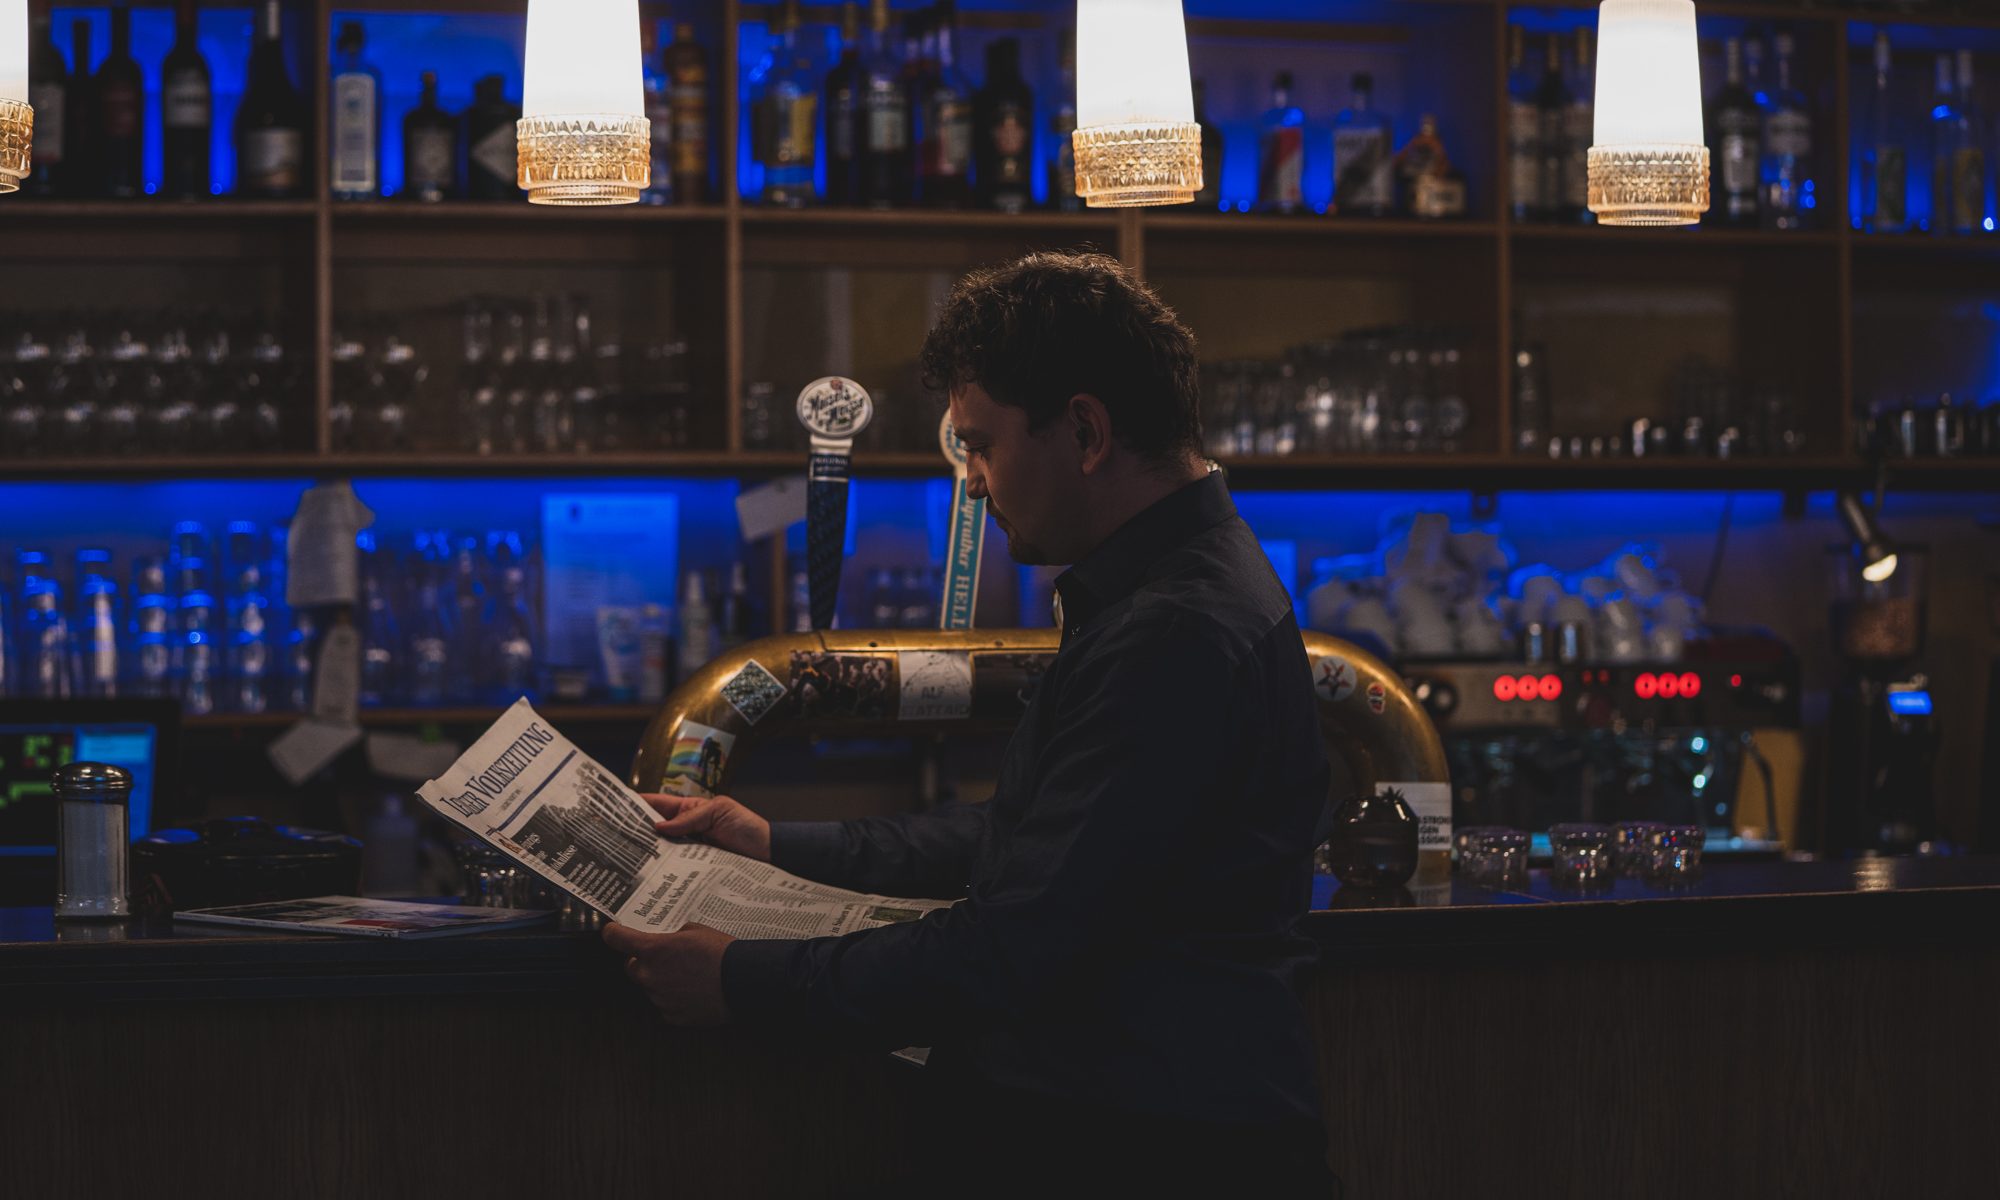 Carlo Winkler in Farbfotografie im Café Cantona sitzend an Bar